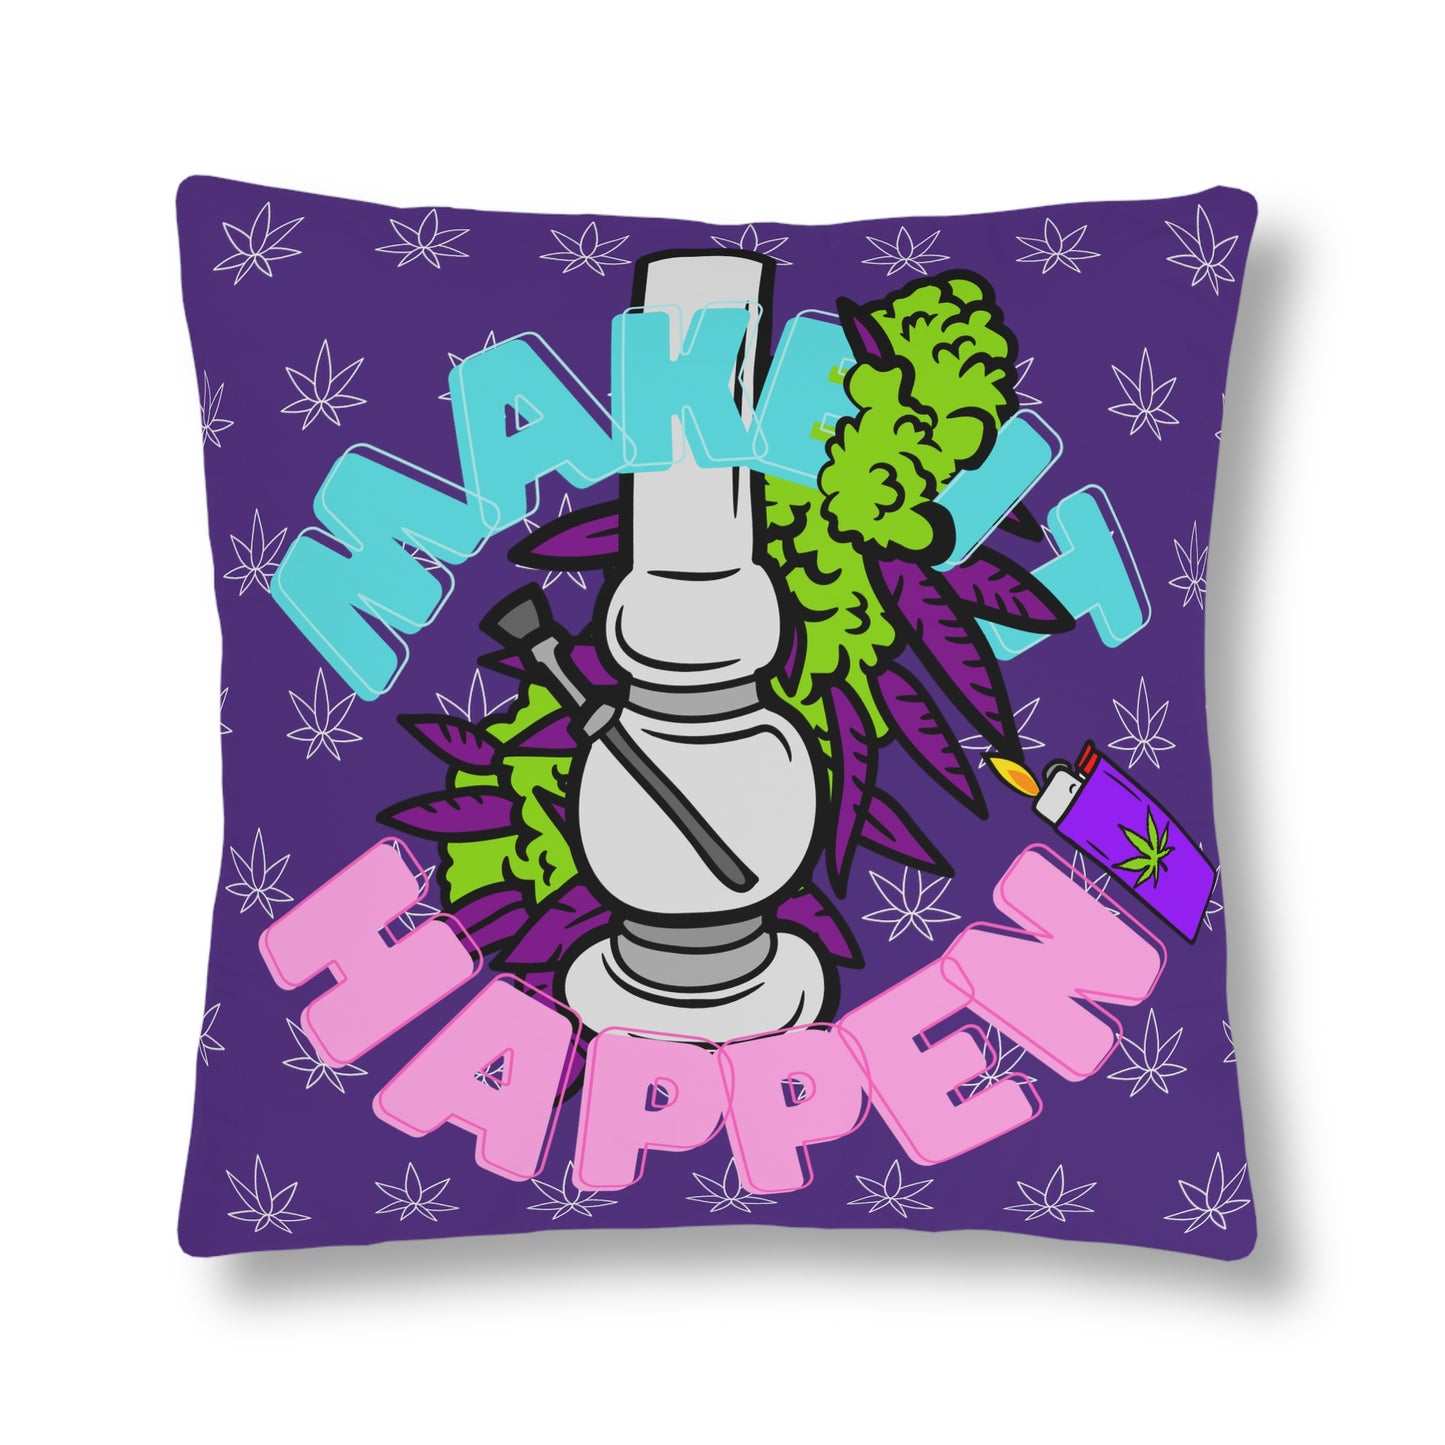 Make It Happen Cannabis Waterproof Pillows